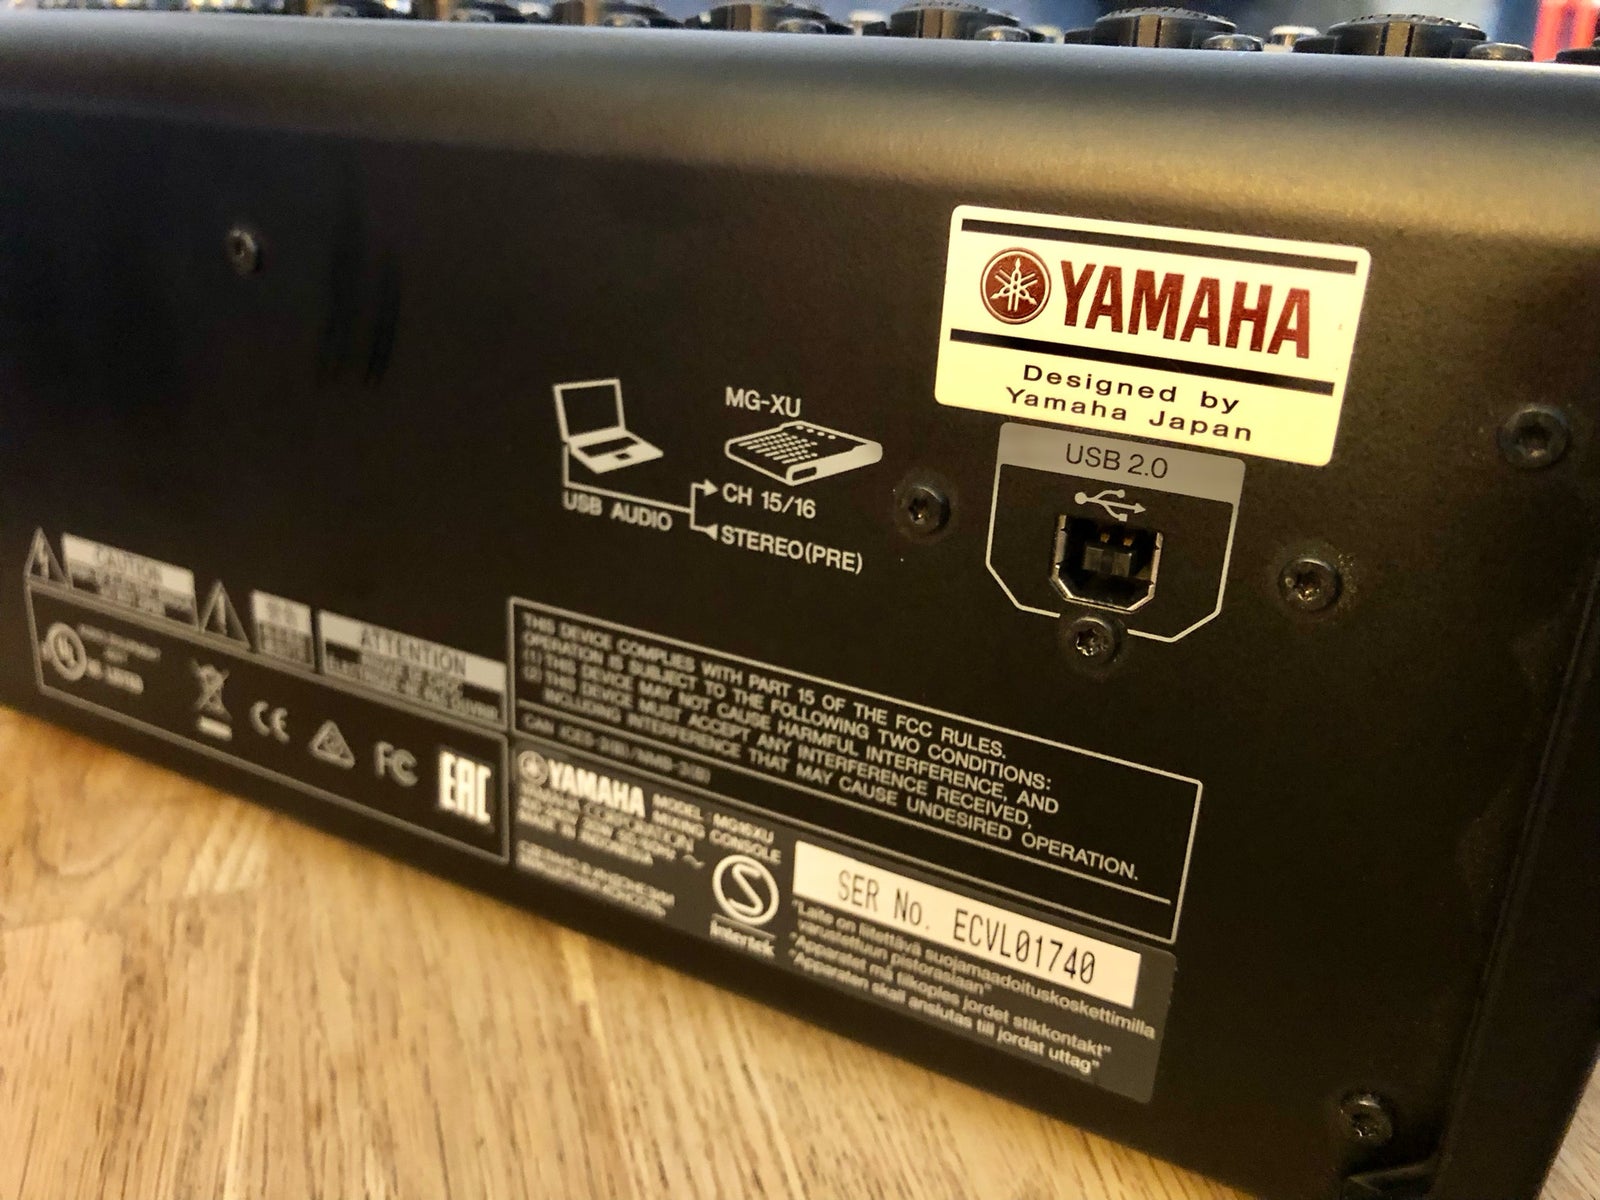 16 Channel Mixer , Yamaha MG16XU